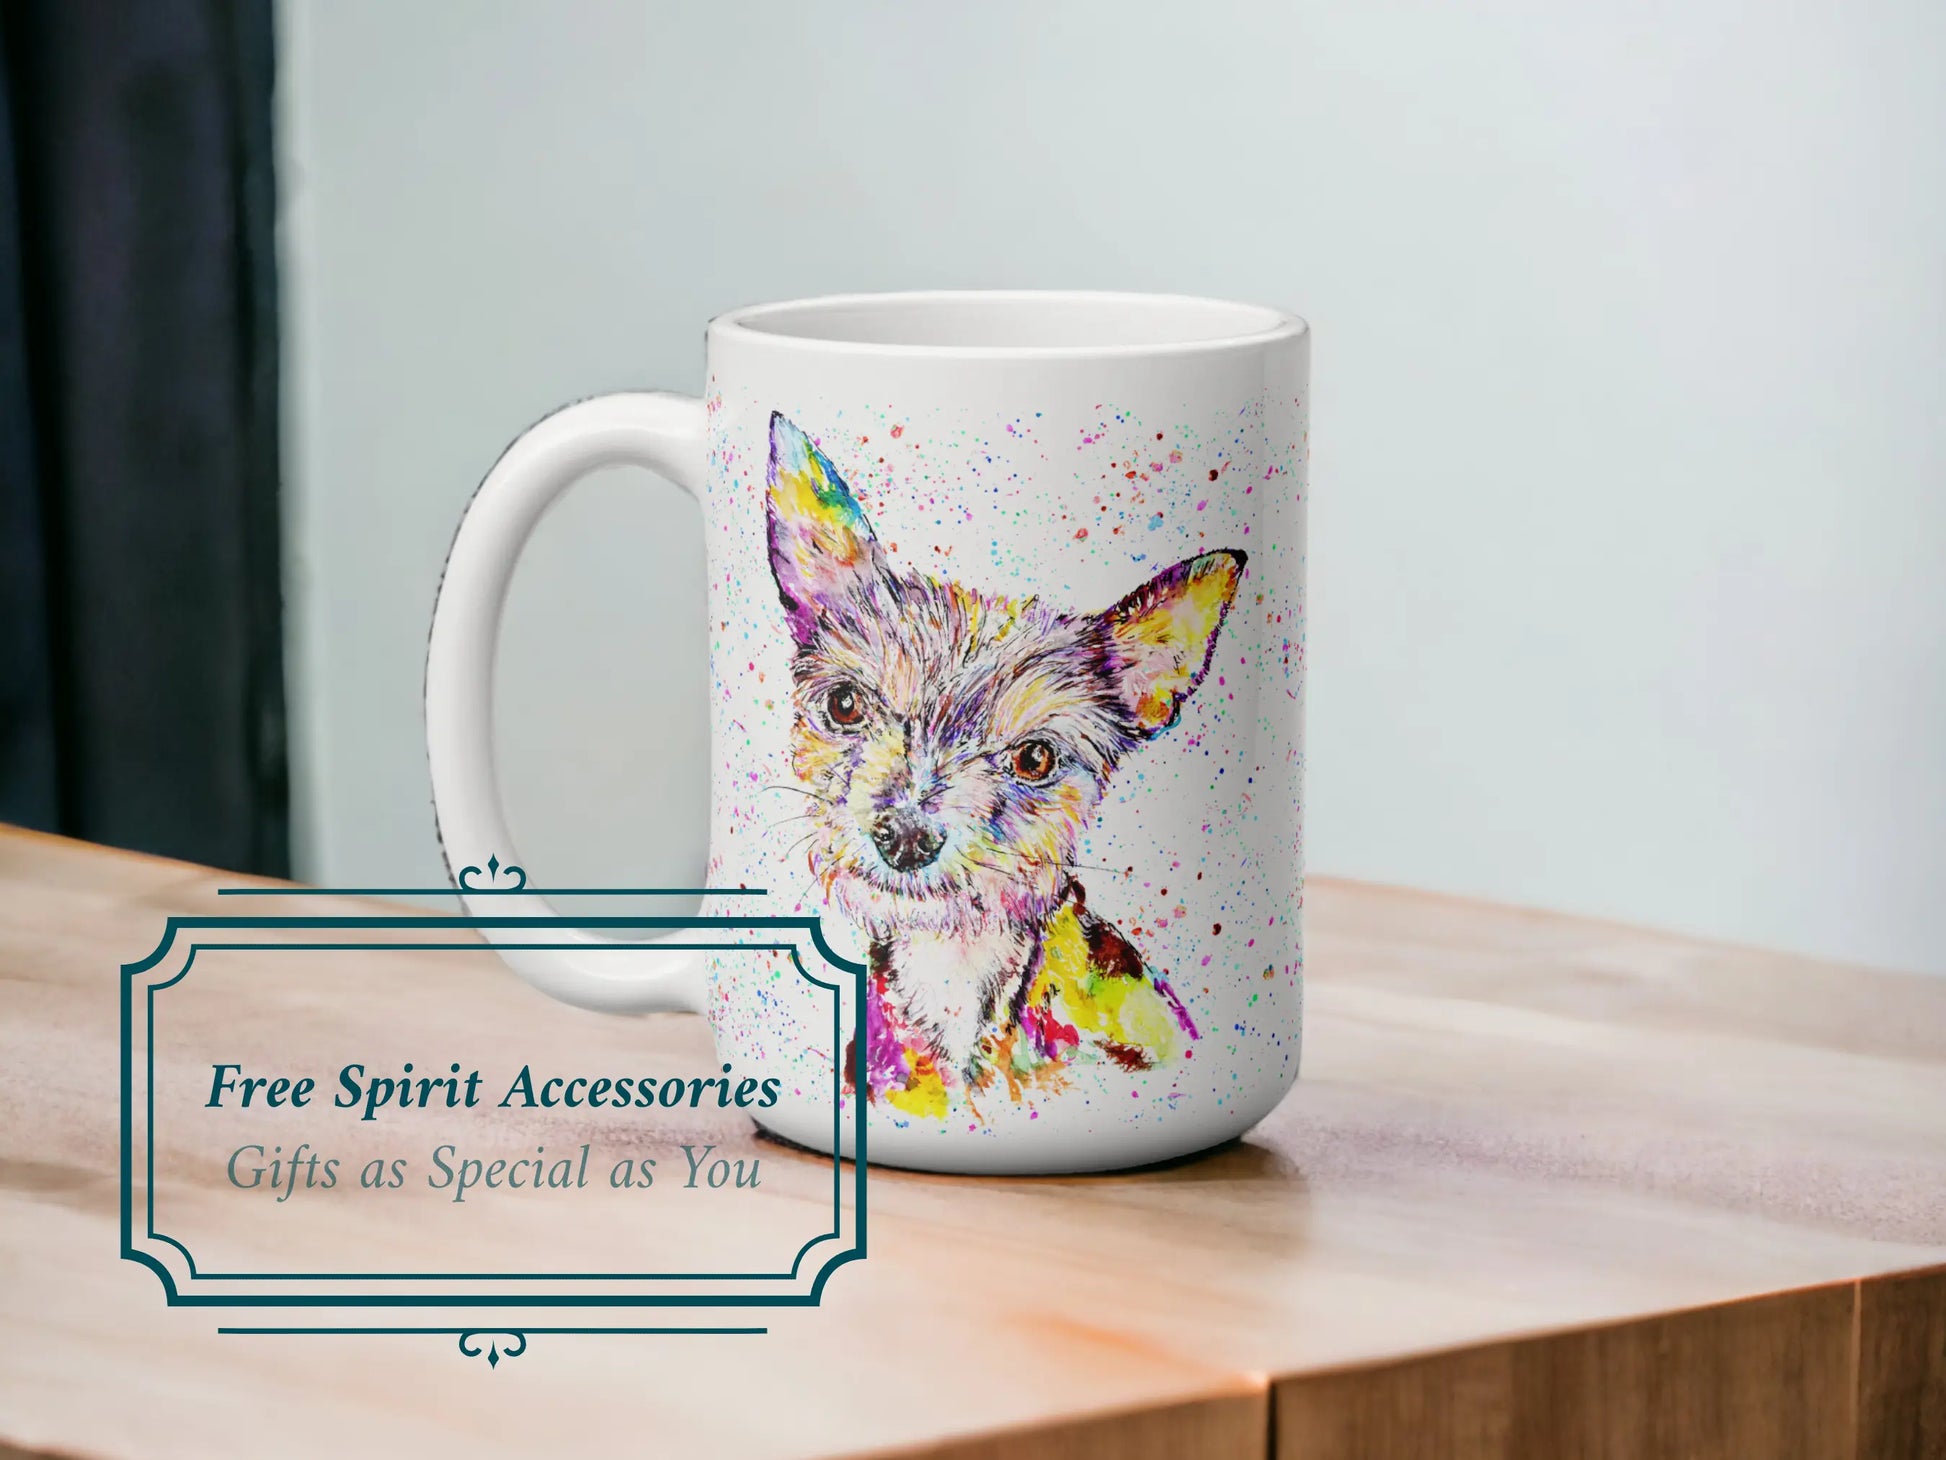  Colourful Chorkie Dog Coffee Mug by Free Spirit Accessories sold by Free Spirit Accessories